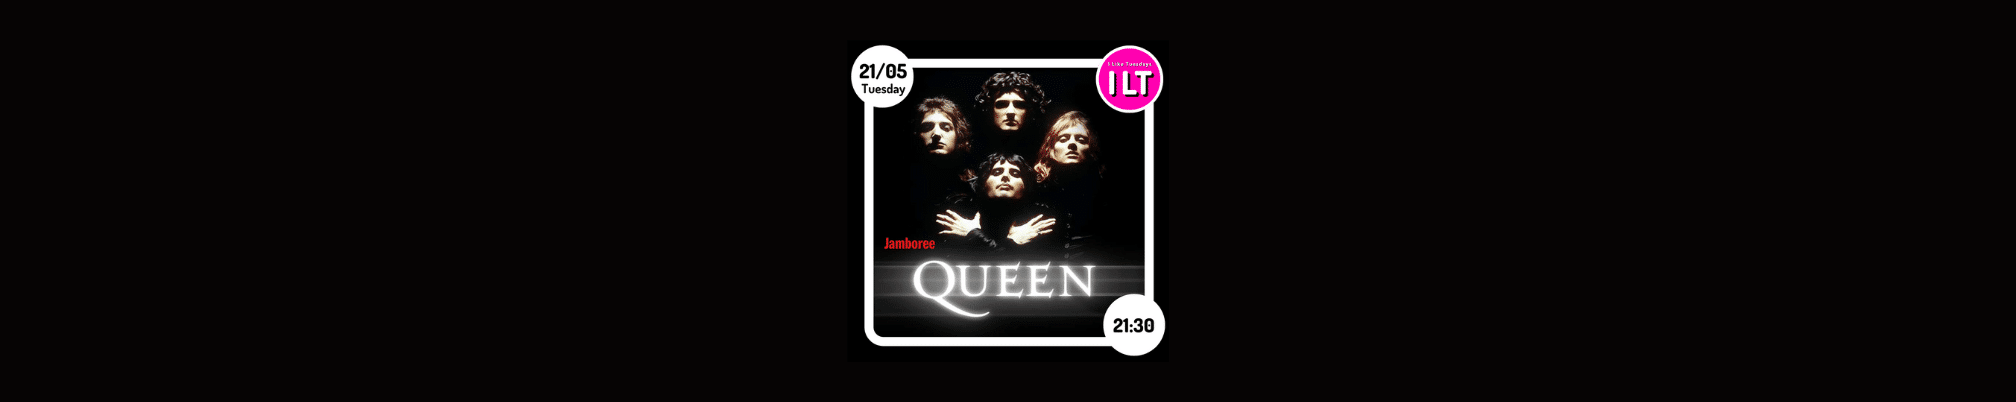 ILT Concerts & Jam - Queen